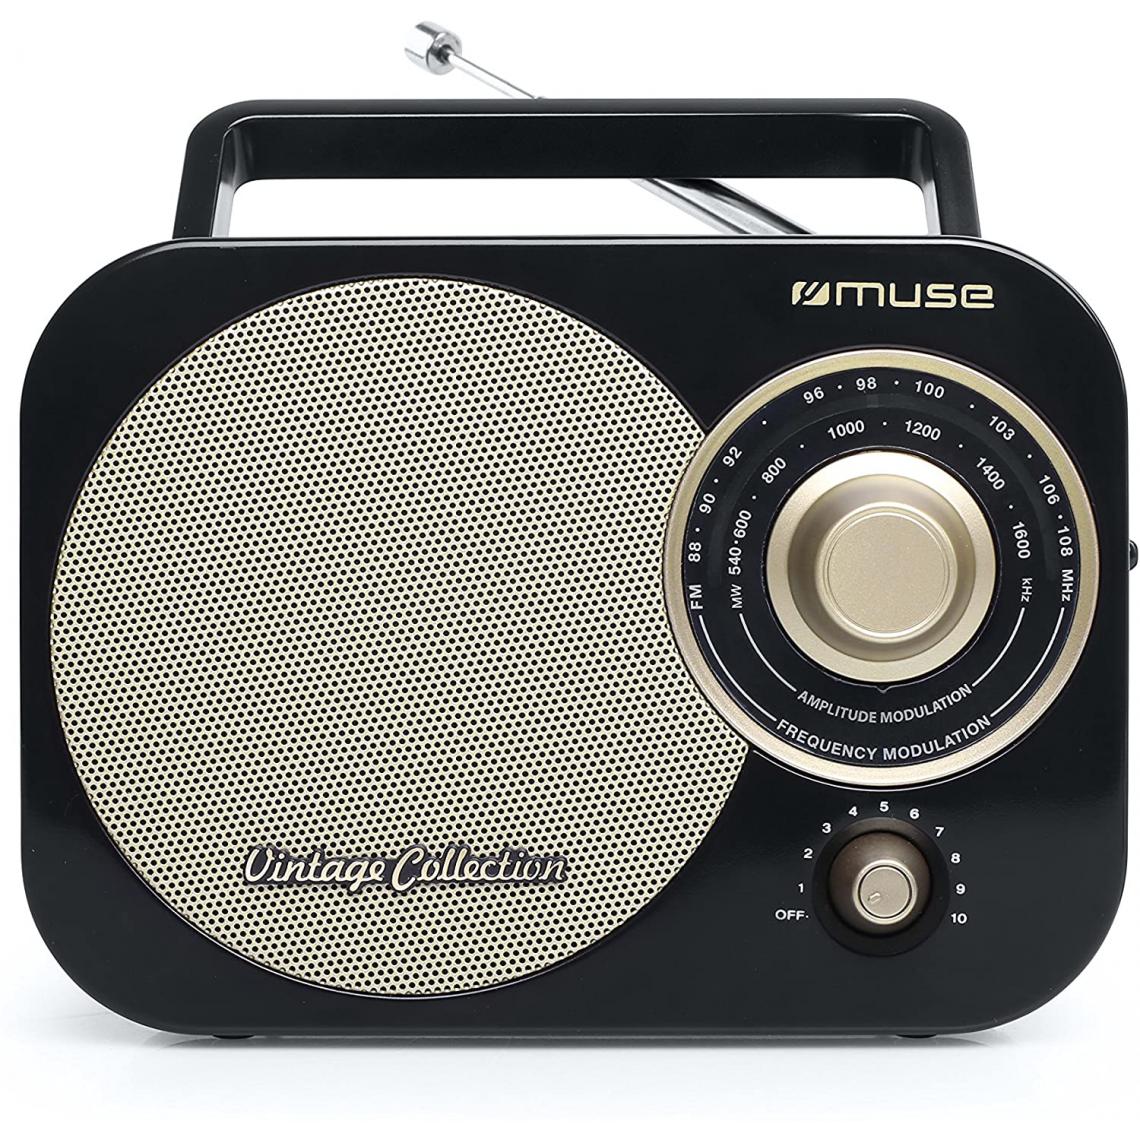 Muse - radio Portable Analogique FM Noir - Radio